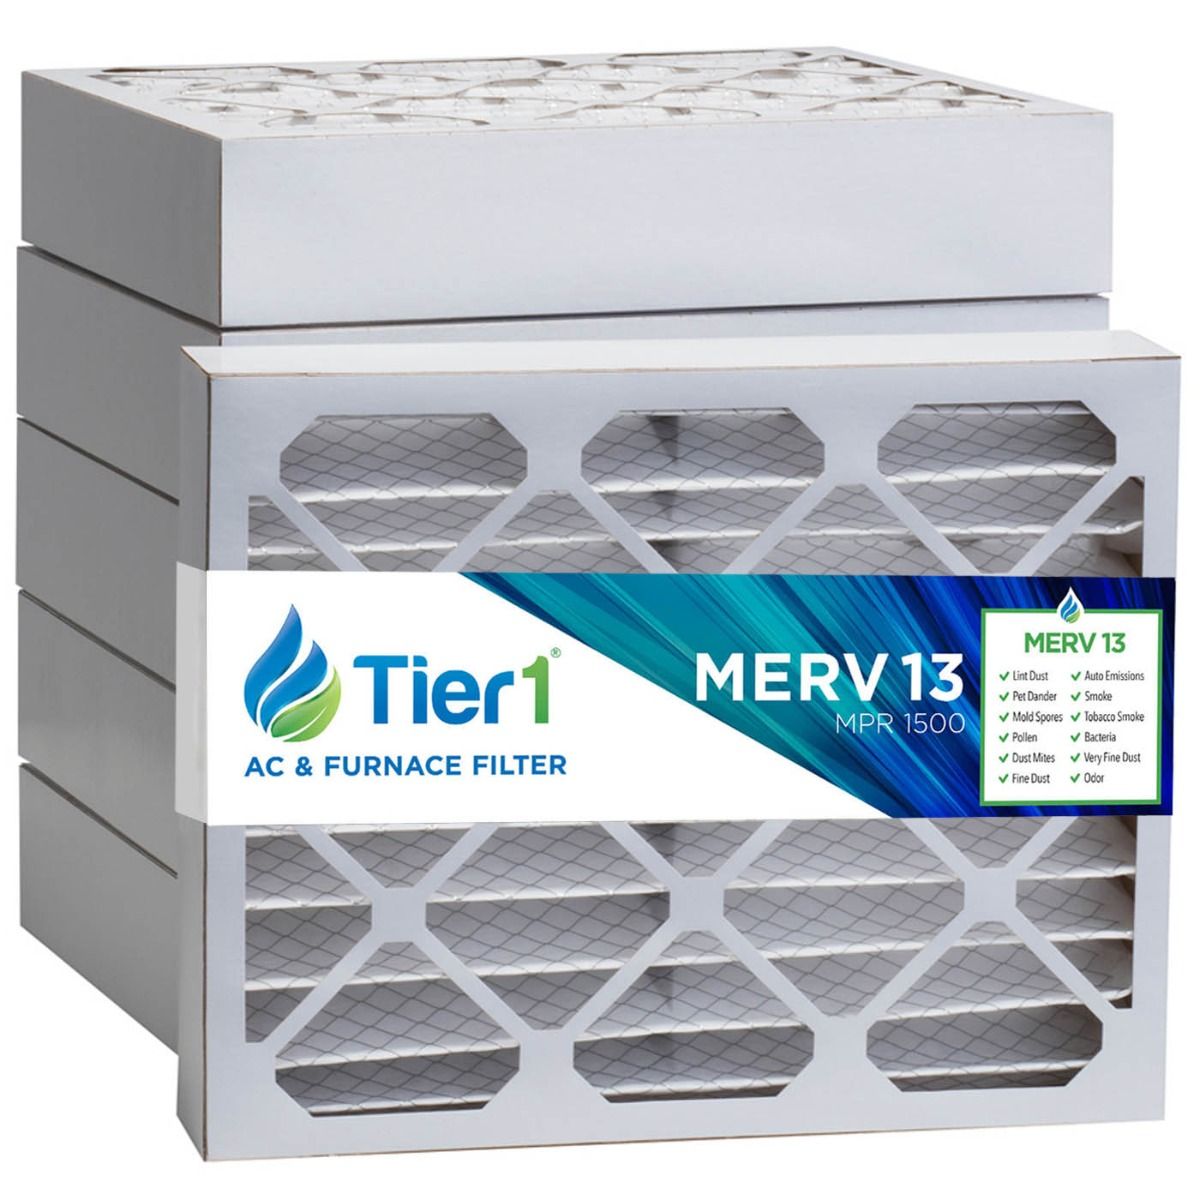 16x20x4 Merv 13 Universal Air Filter By Tier1 (Single Filter)